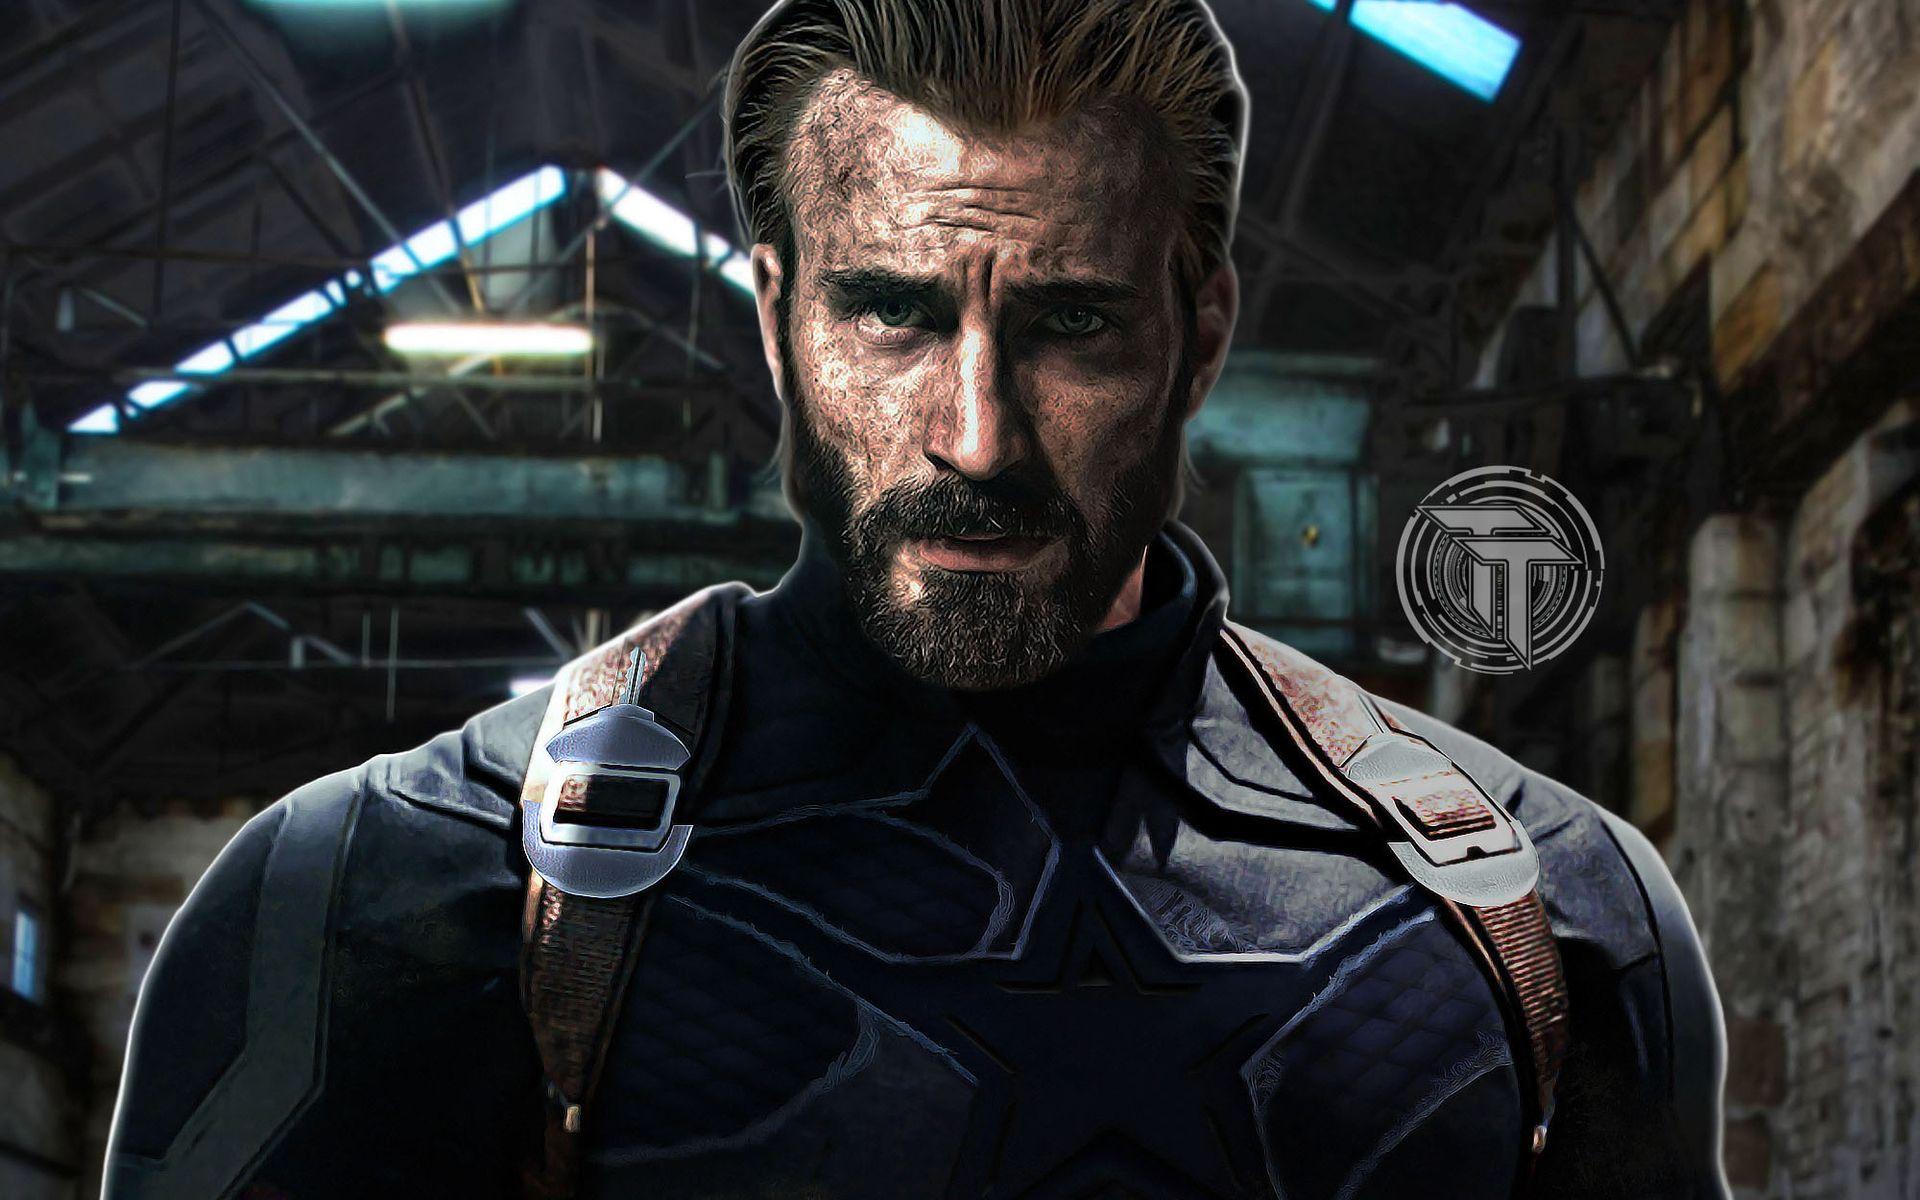 Download wallpaper Captain America, 2018 movie, superheroes